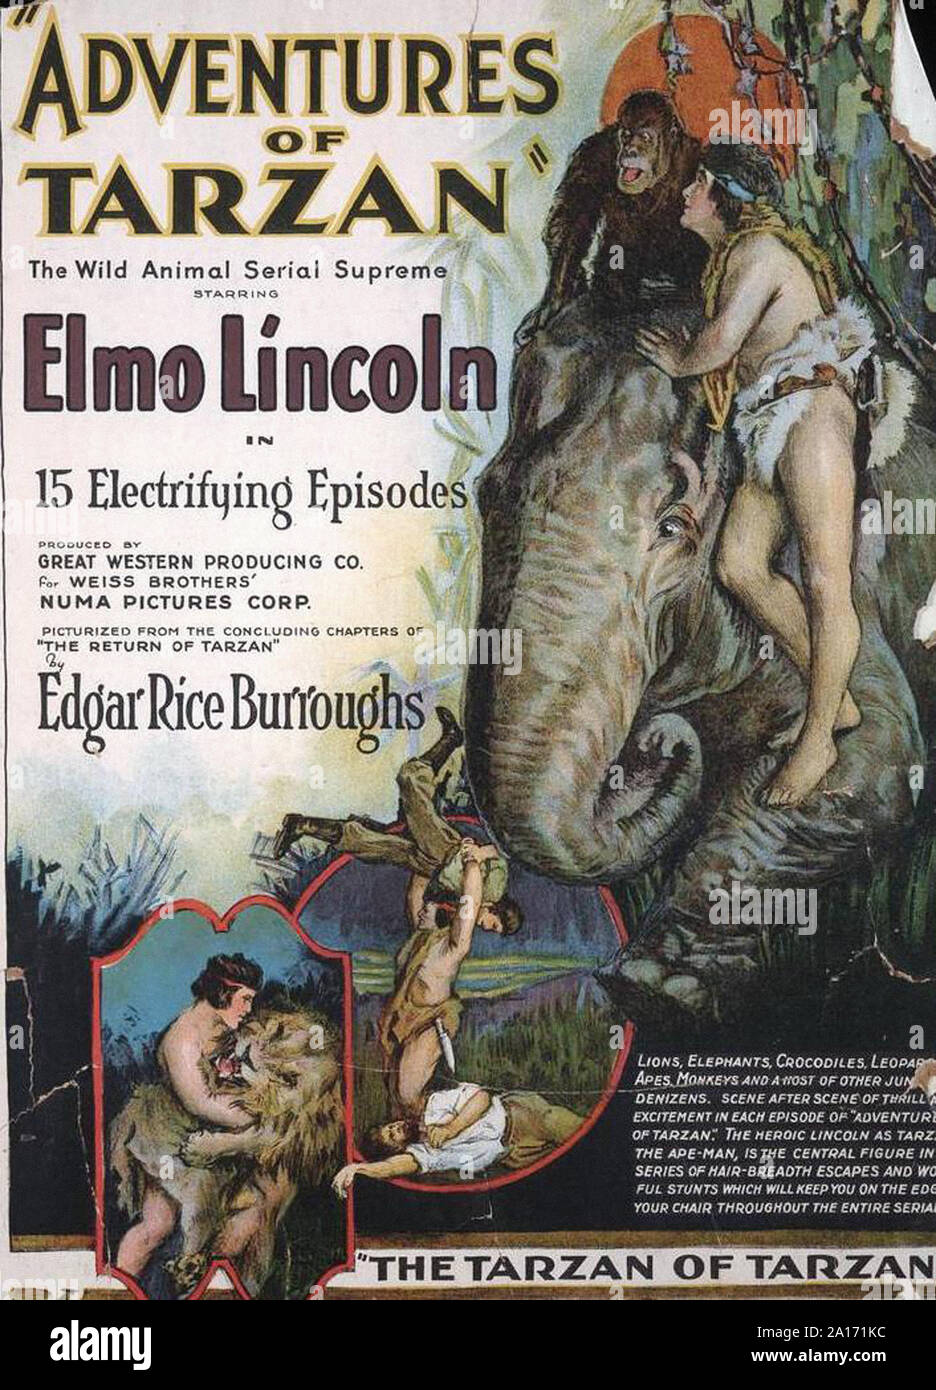 Adventures of Tarzan  - Promotional poster - Silent Movie Era Stock Photo